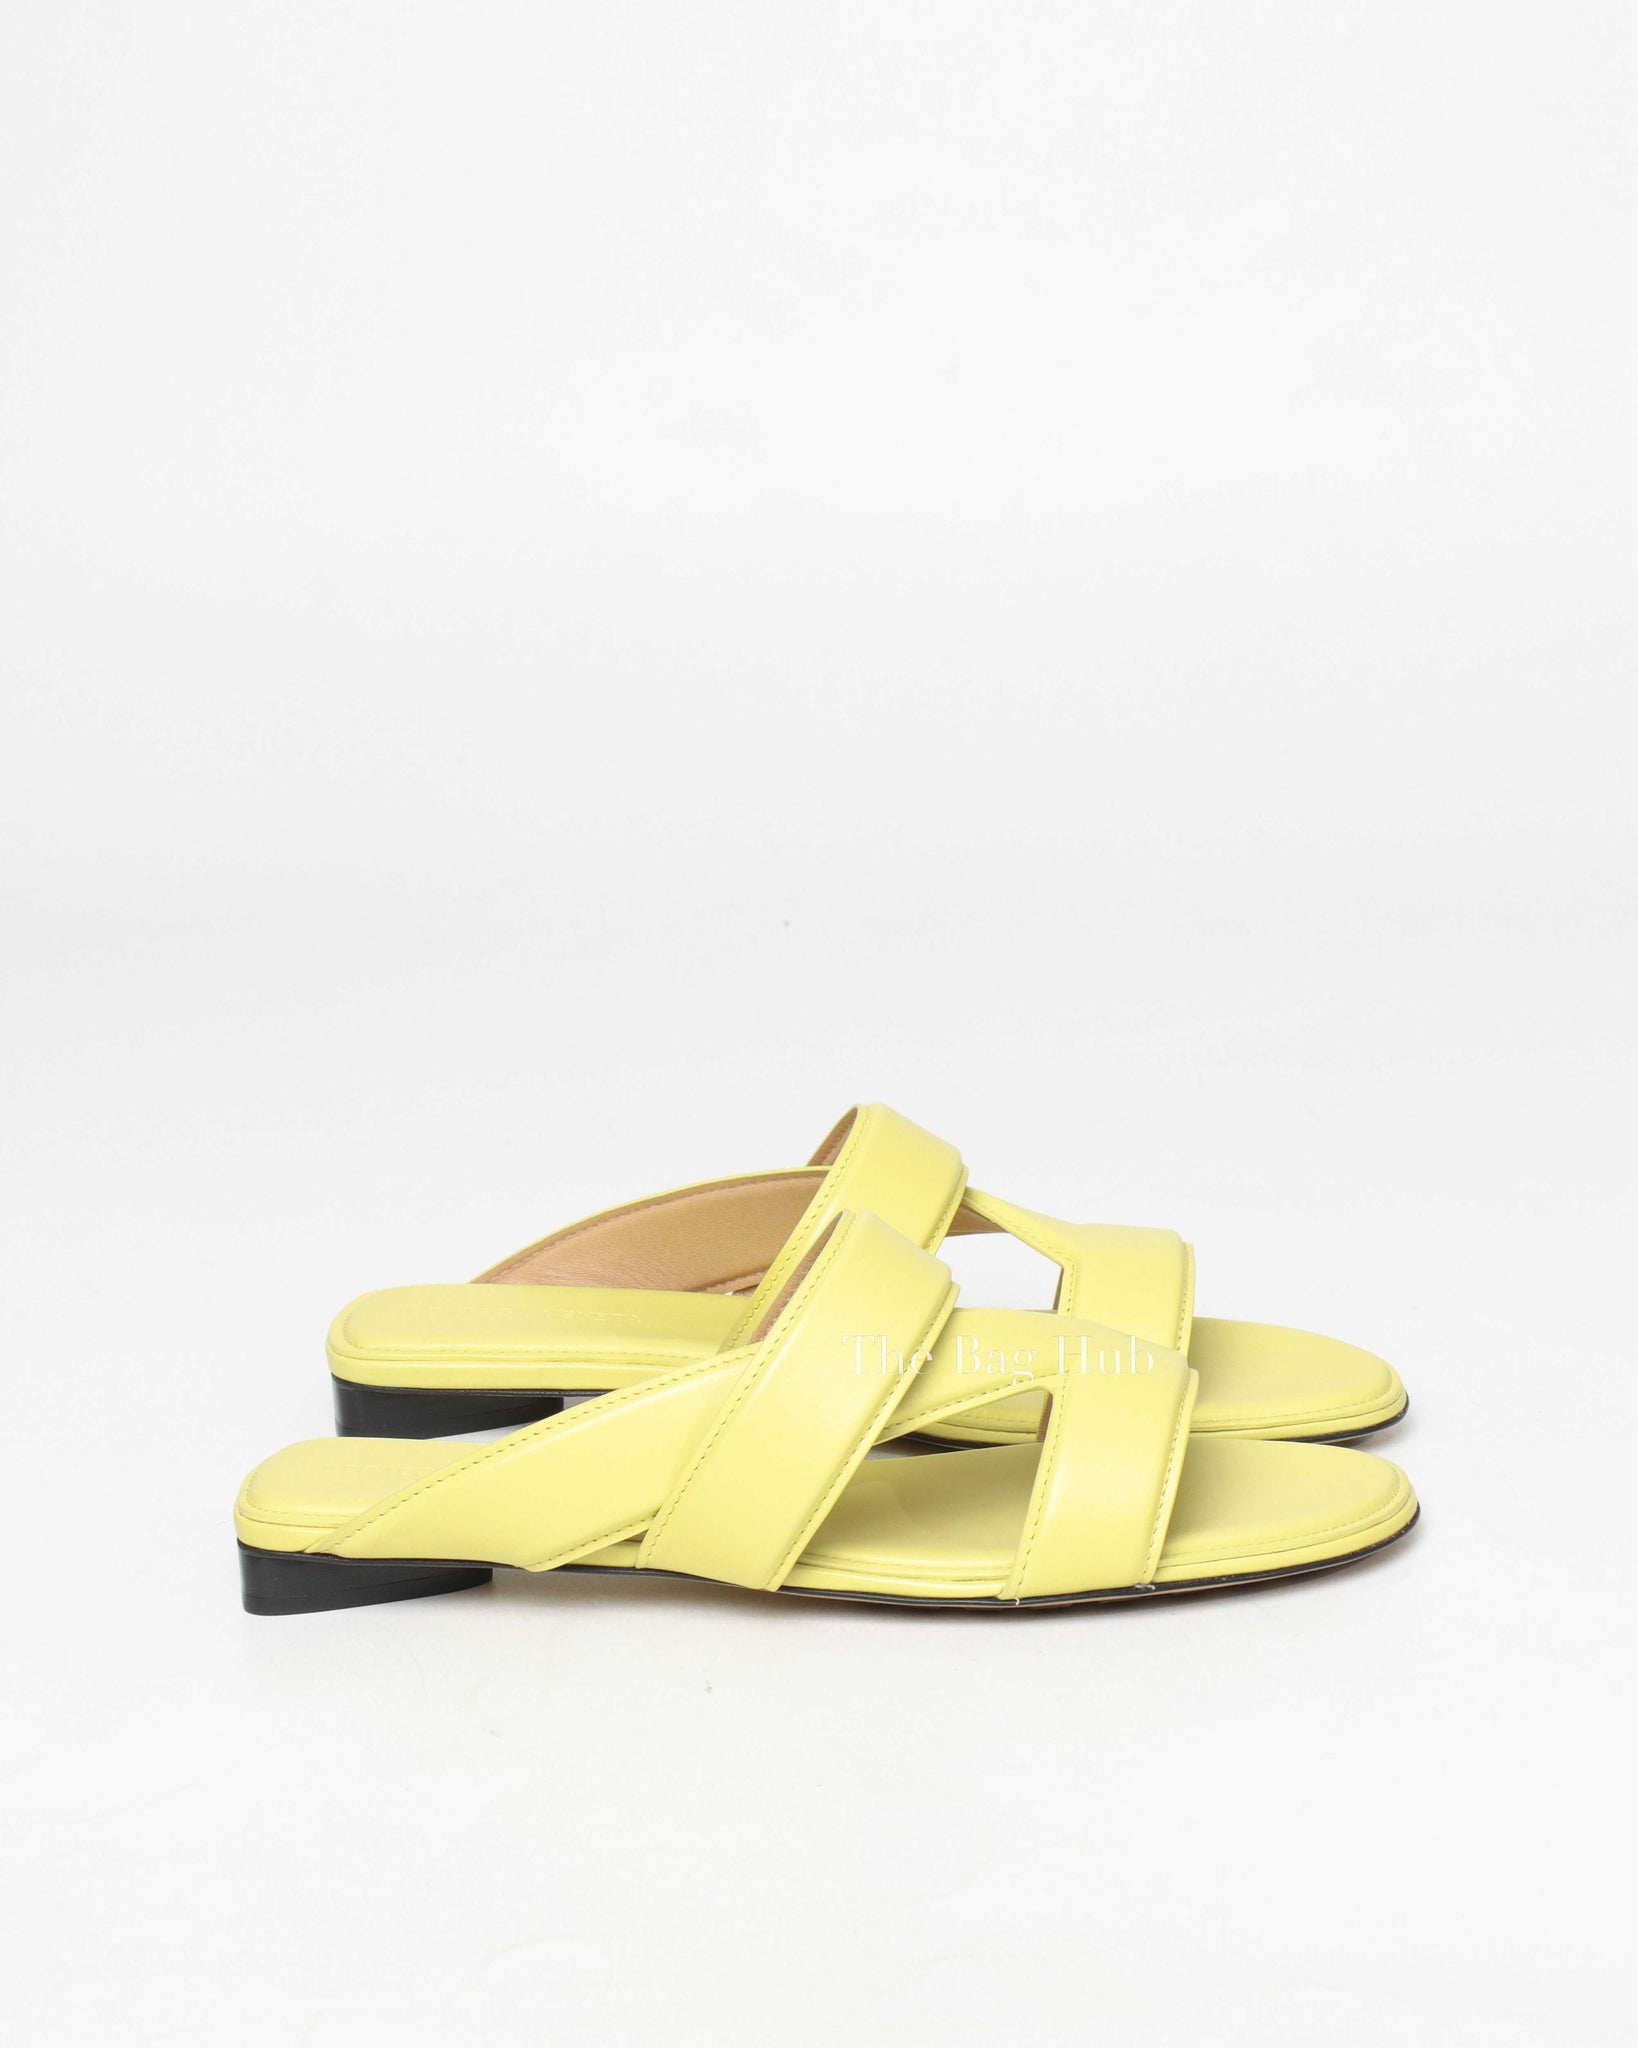 Bottega Veneta Light Yellow Leather Band Flat Sandals Size 38-5